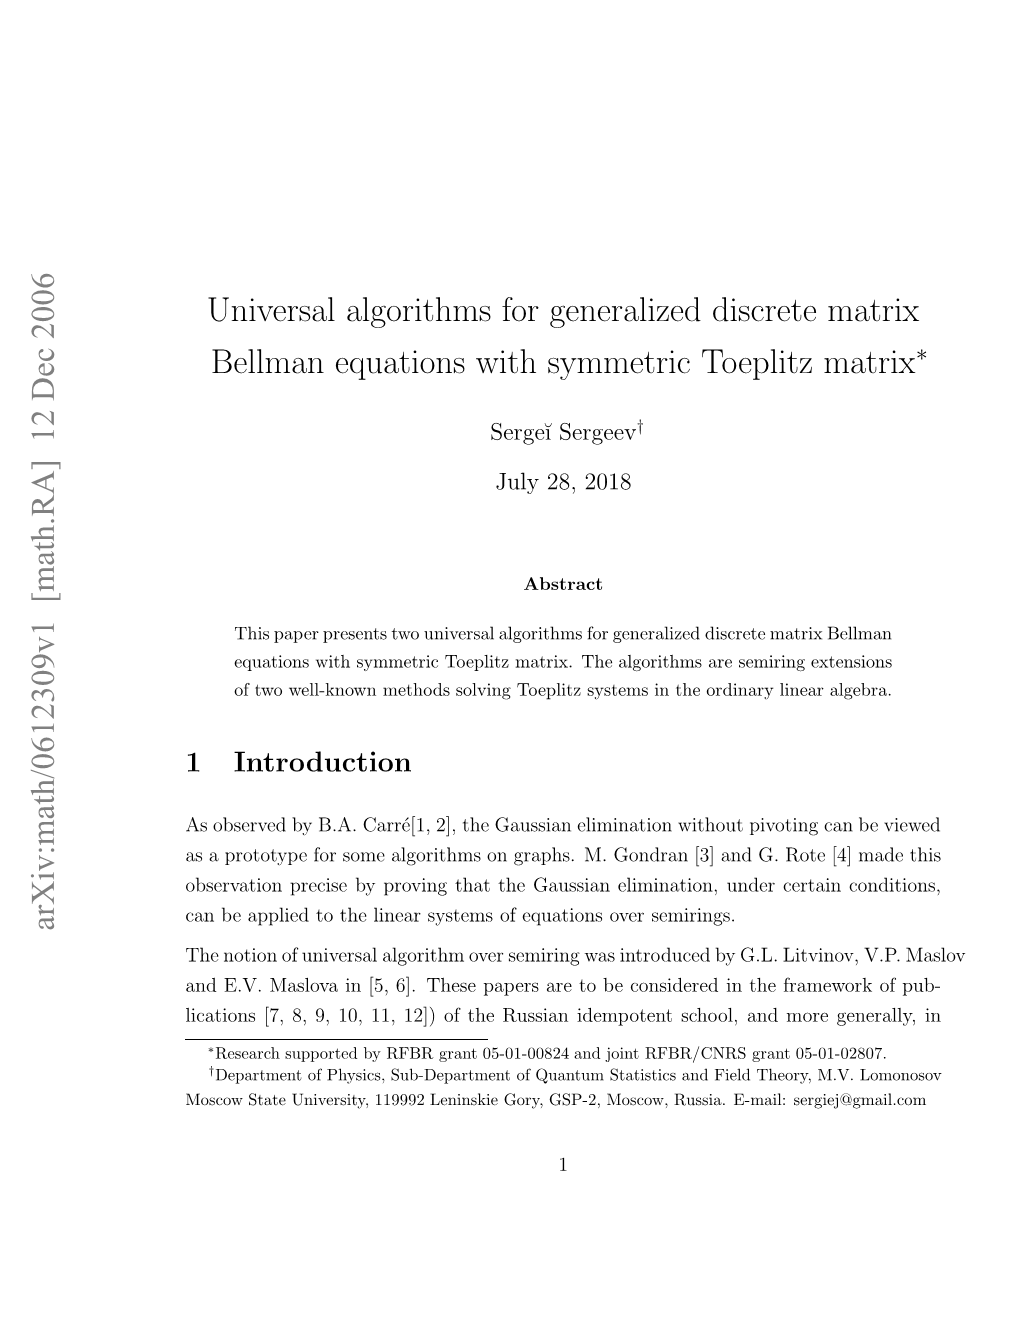 Universal Algorithms for Generalized Discrete Matrix Bellman Equations